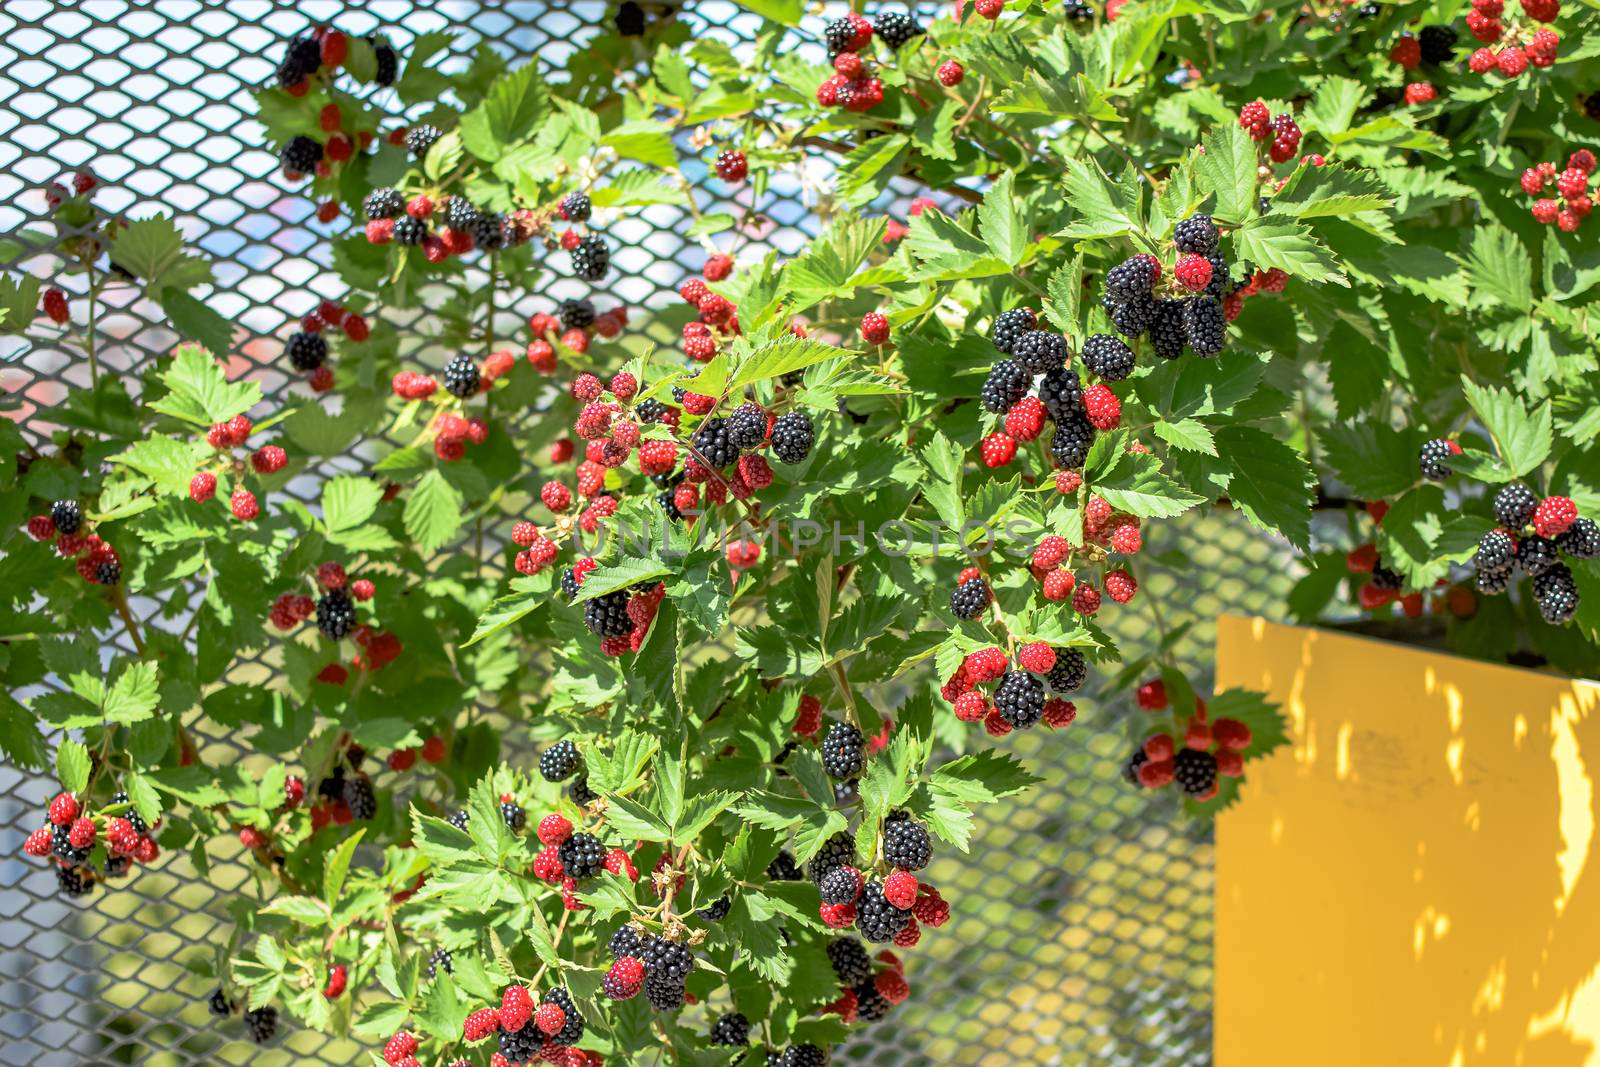 Ripe and unripe blackberries growing on a rooftop garden in Vienna